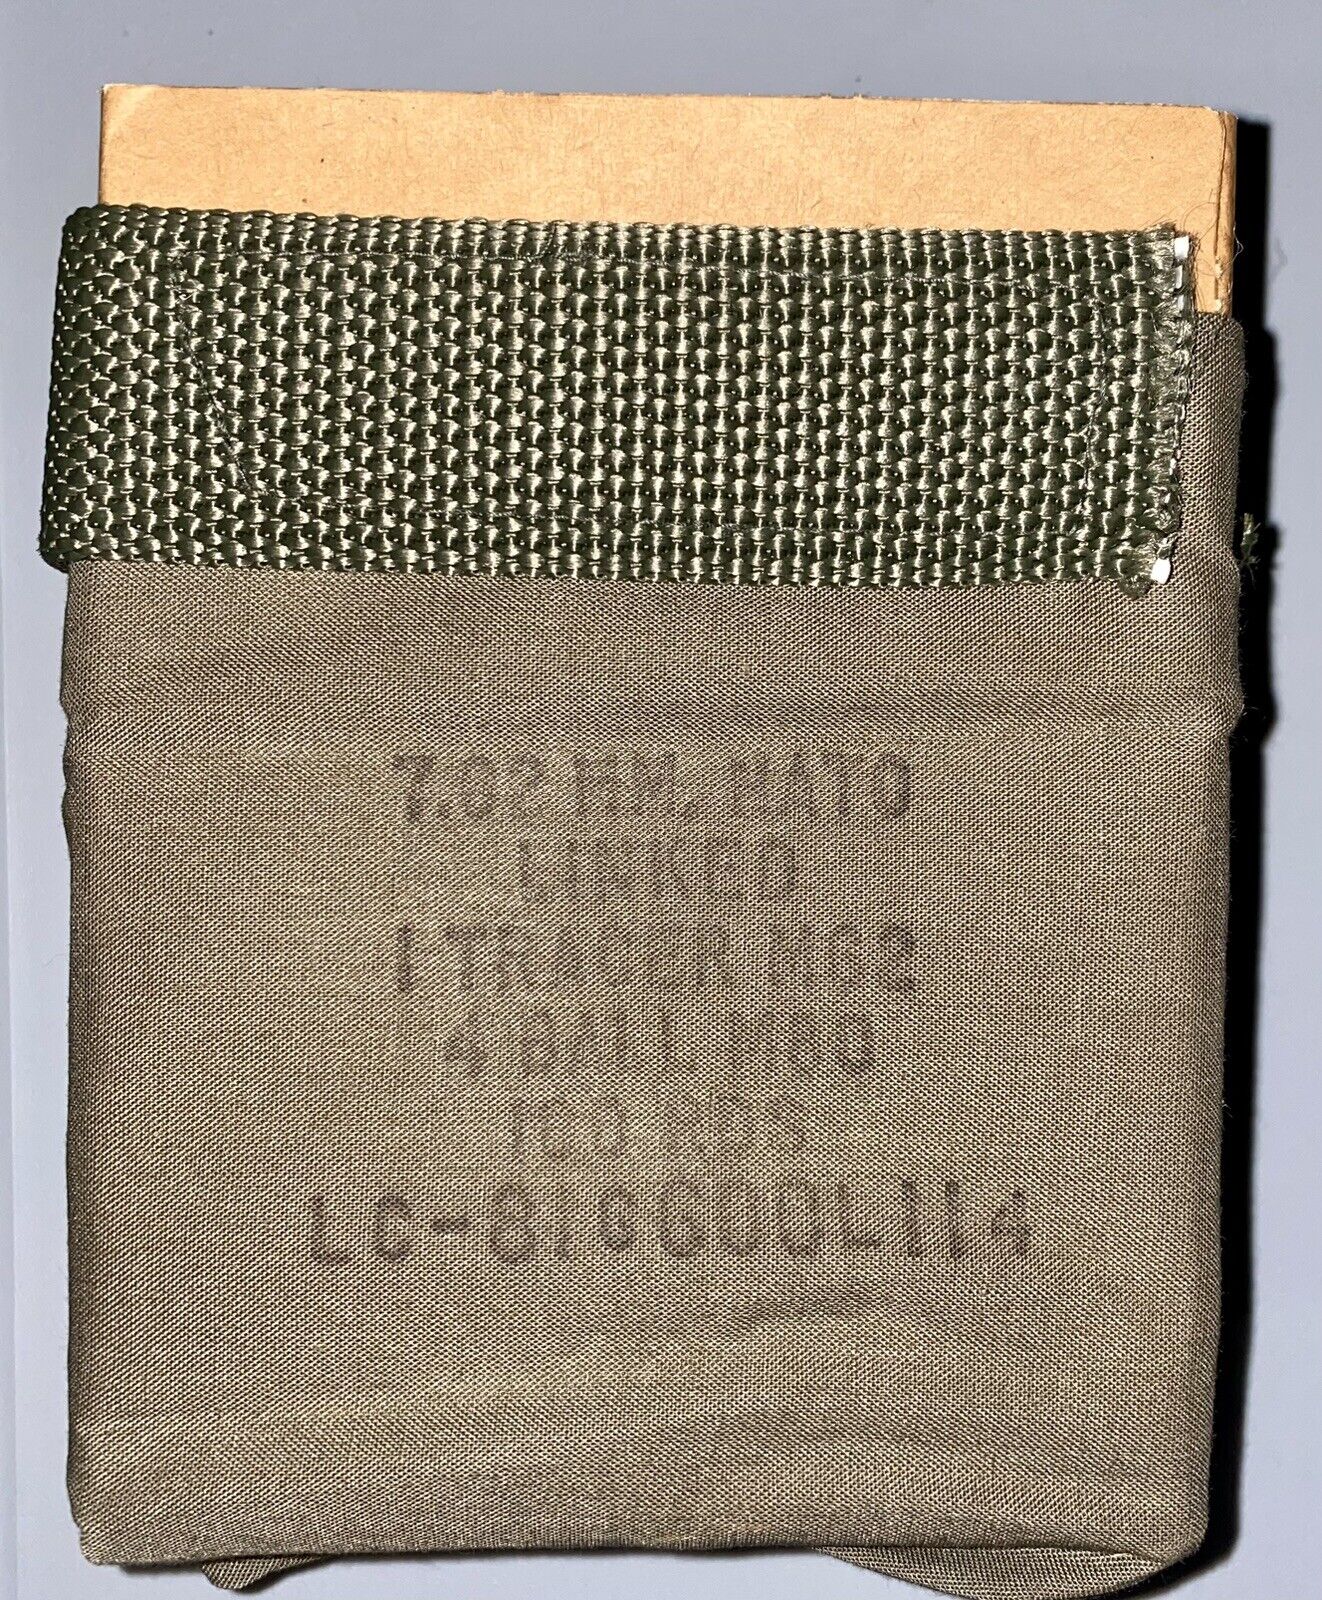 ORIGINAL U.S. Surplus 1979 Ammo Bag (Holds 100RD) w/OG Box Included